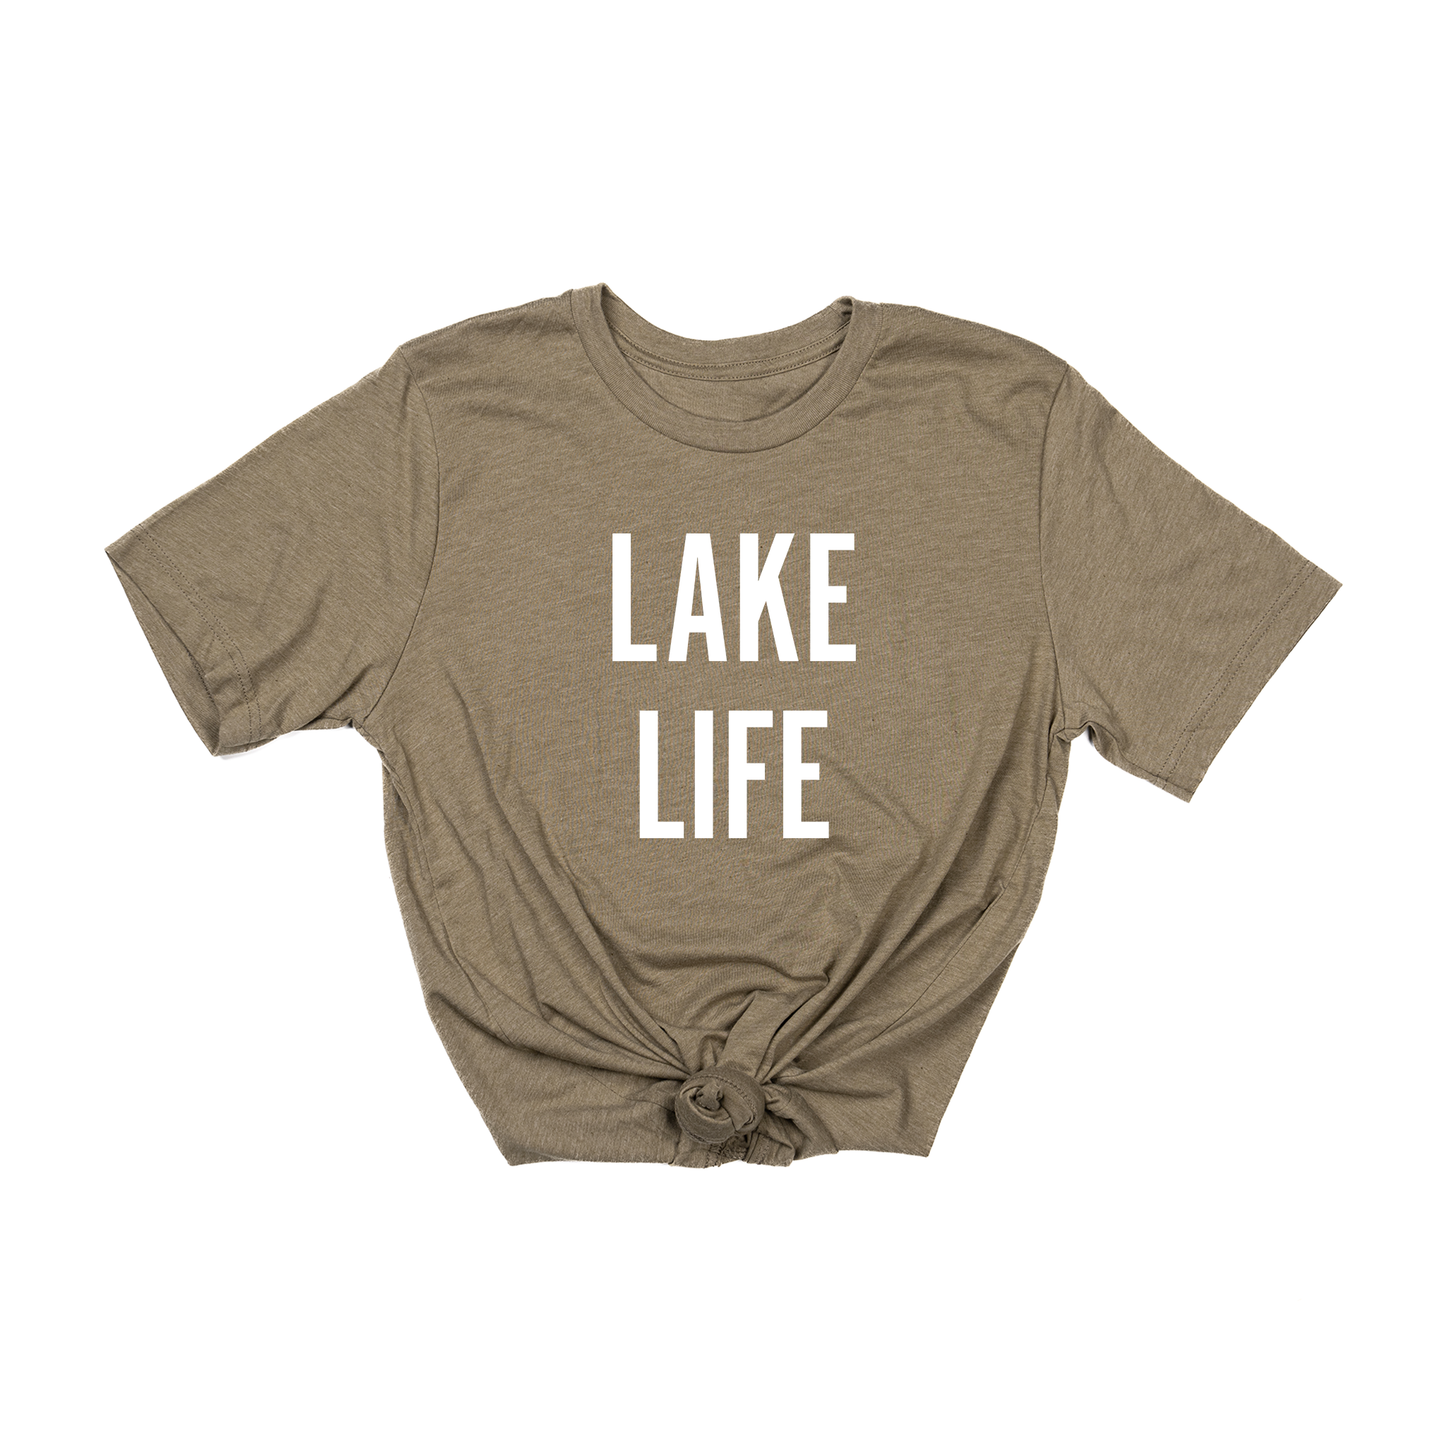 Lake Life (White) - Tee (Olive)